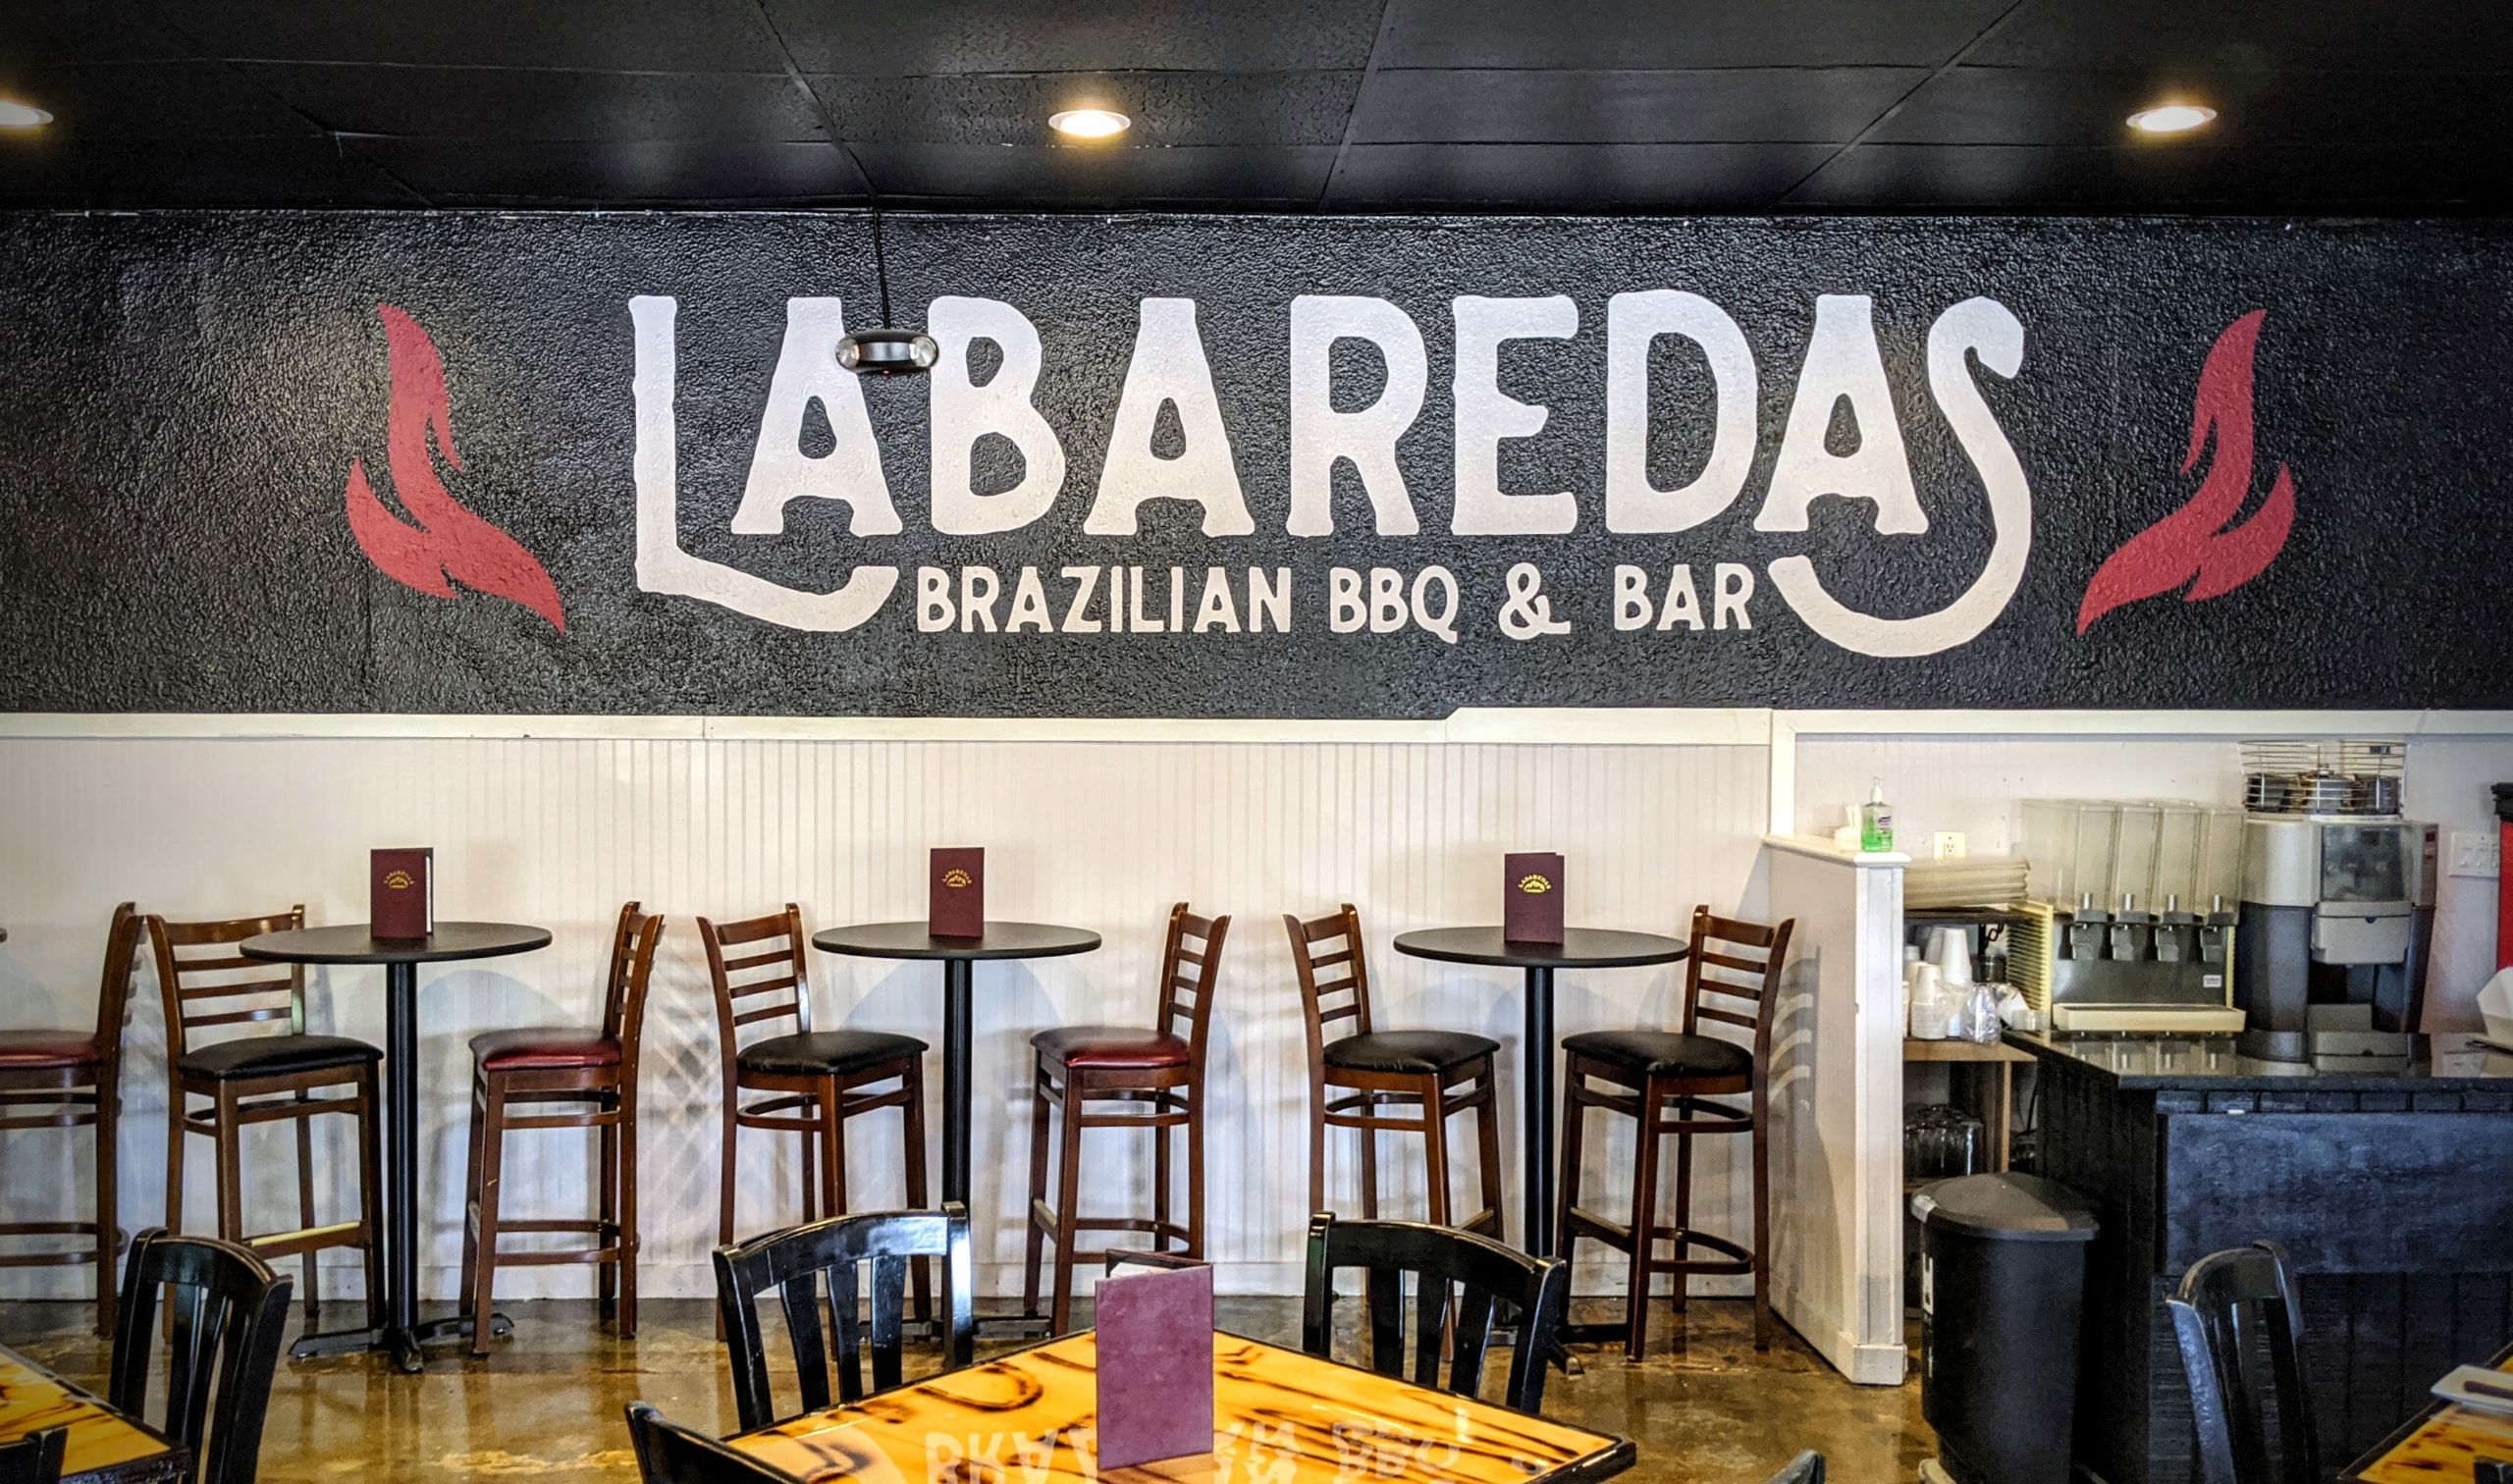 Home â Labaredas Brazilian BBQ & Bar